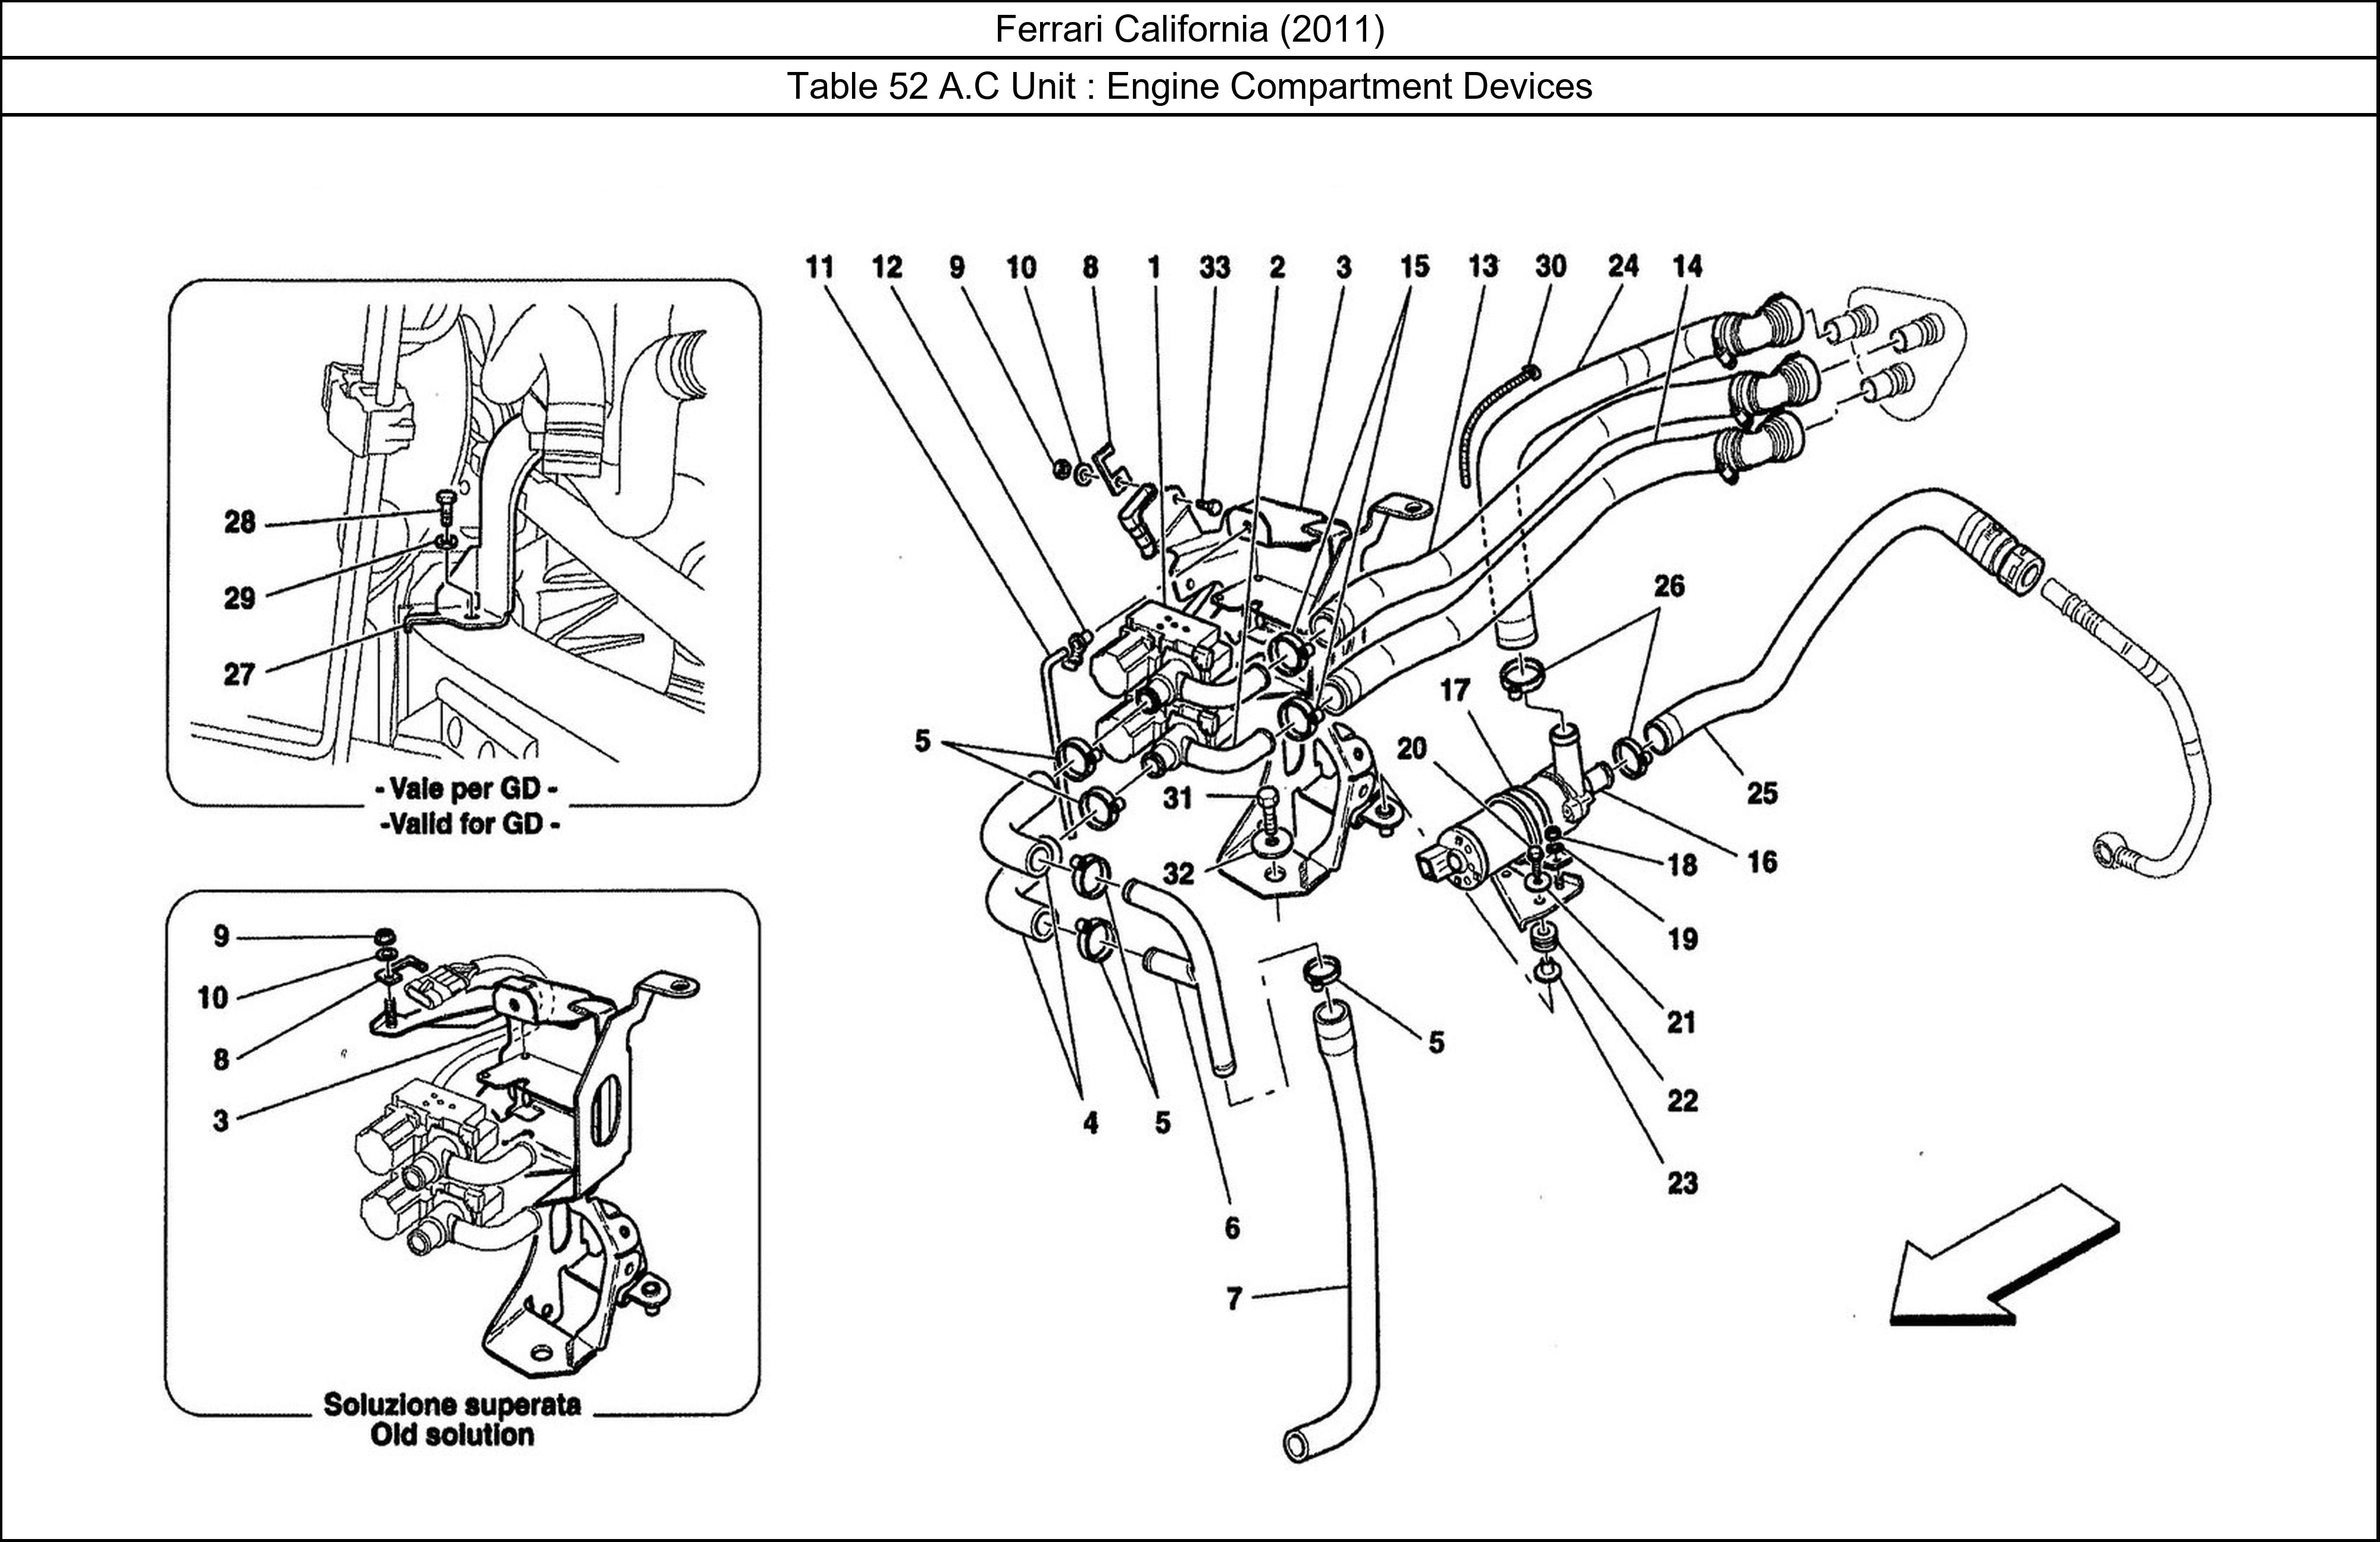 Ferrari Parts Ferrari California (2011) Table 52 A.C Unit : Engine Compartment Devices